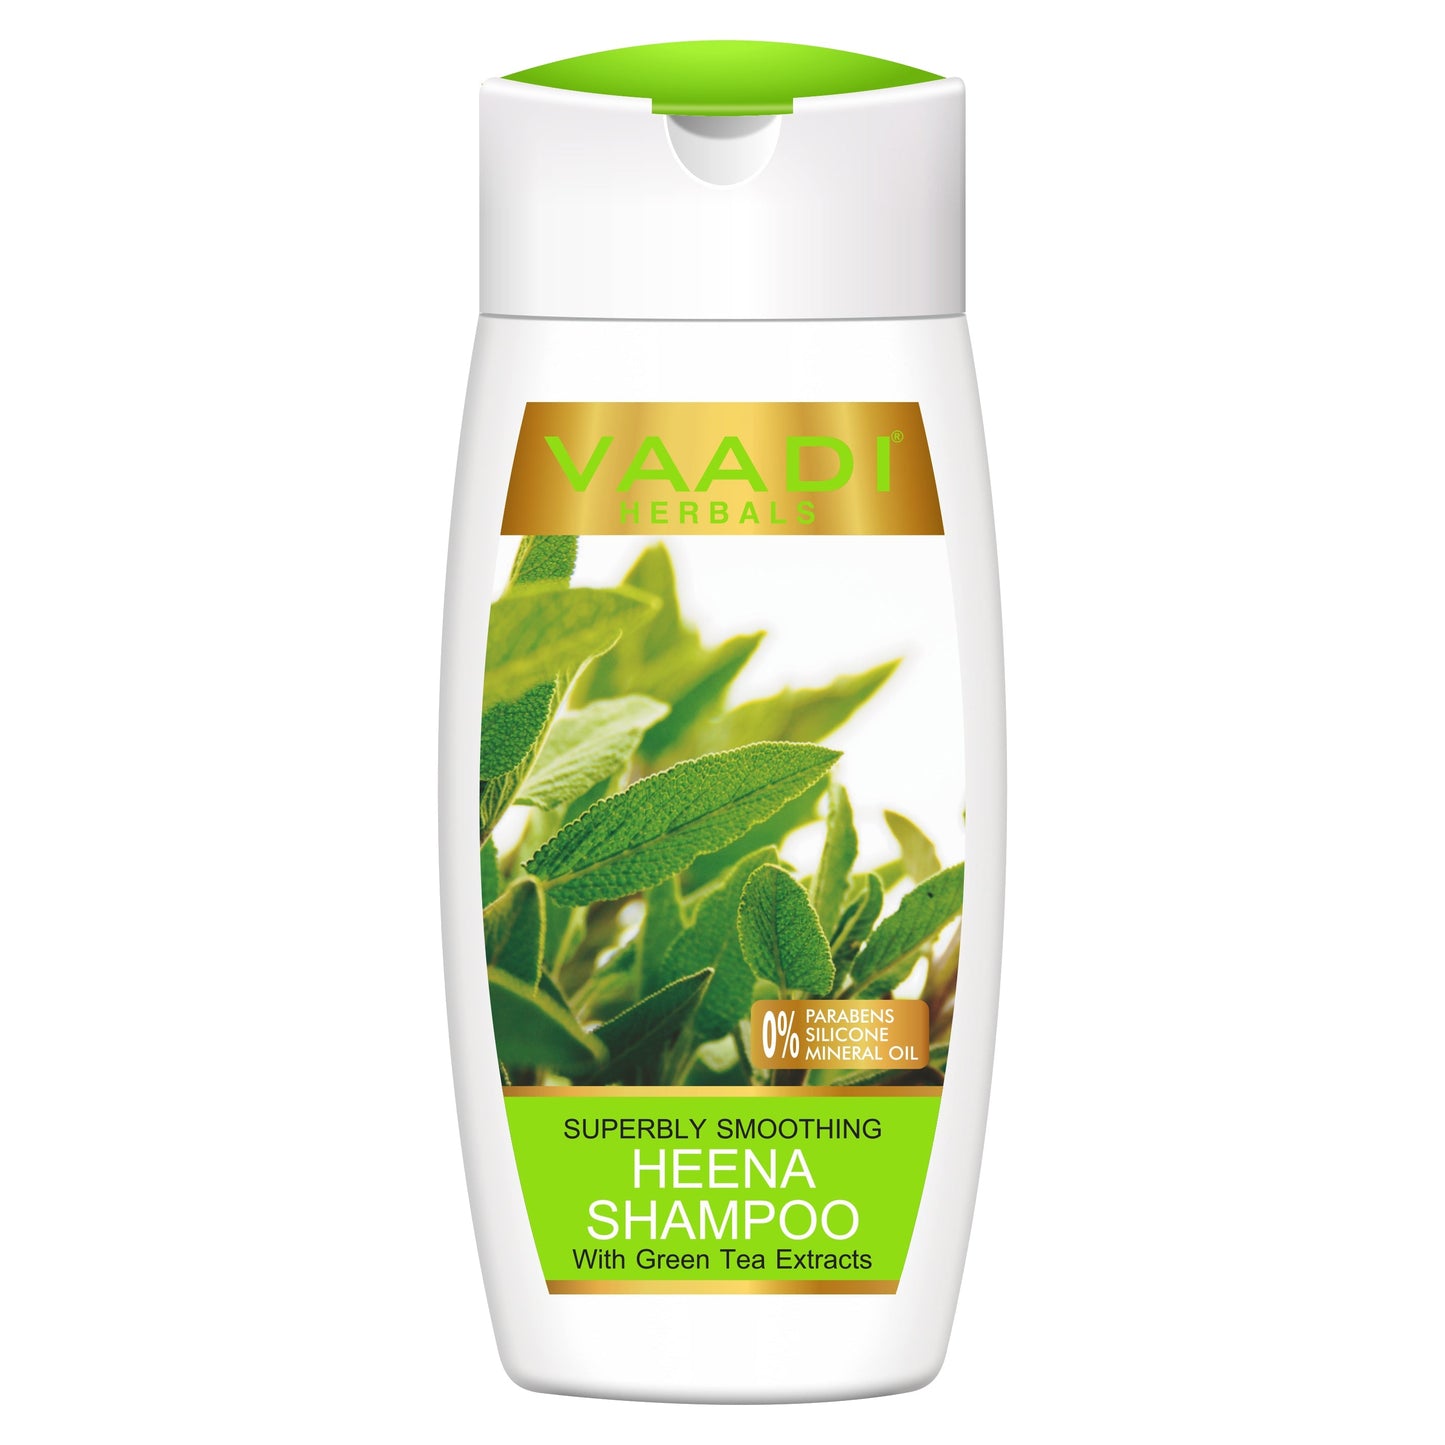 Superbly Smoothing Organic Heena Shampoo with Green Tea Extract (110 ml/4 fl oz)